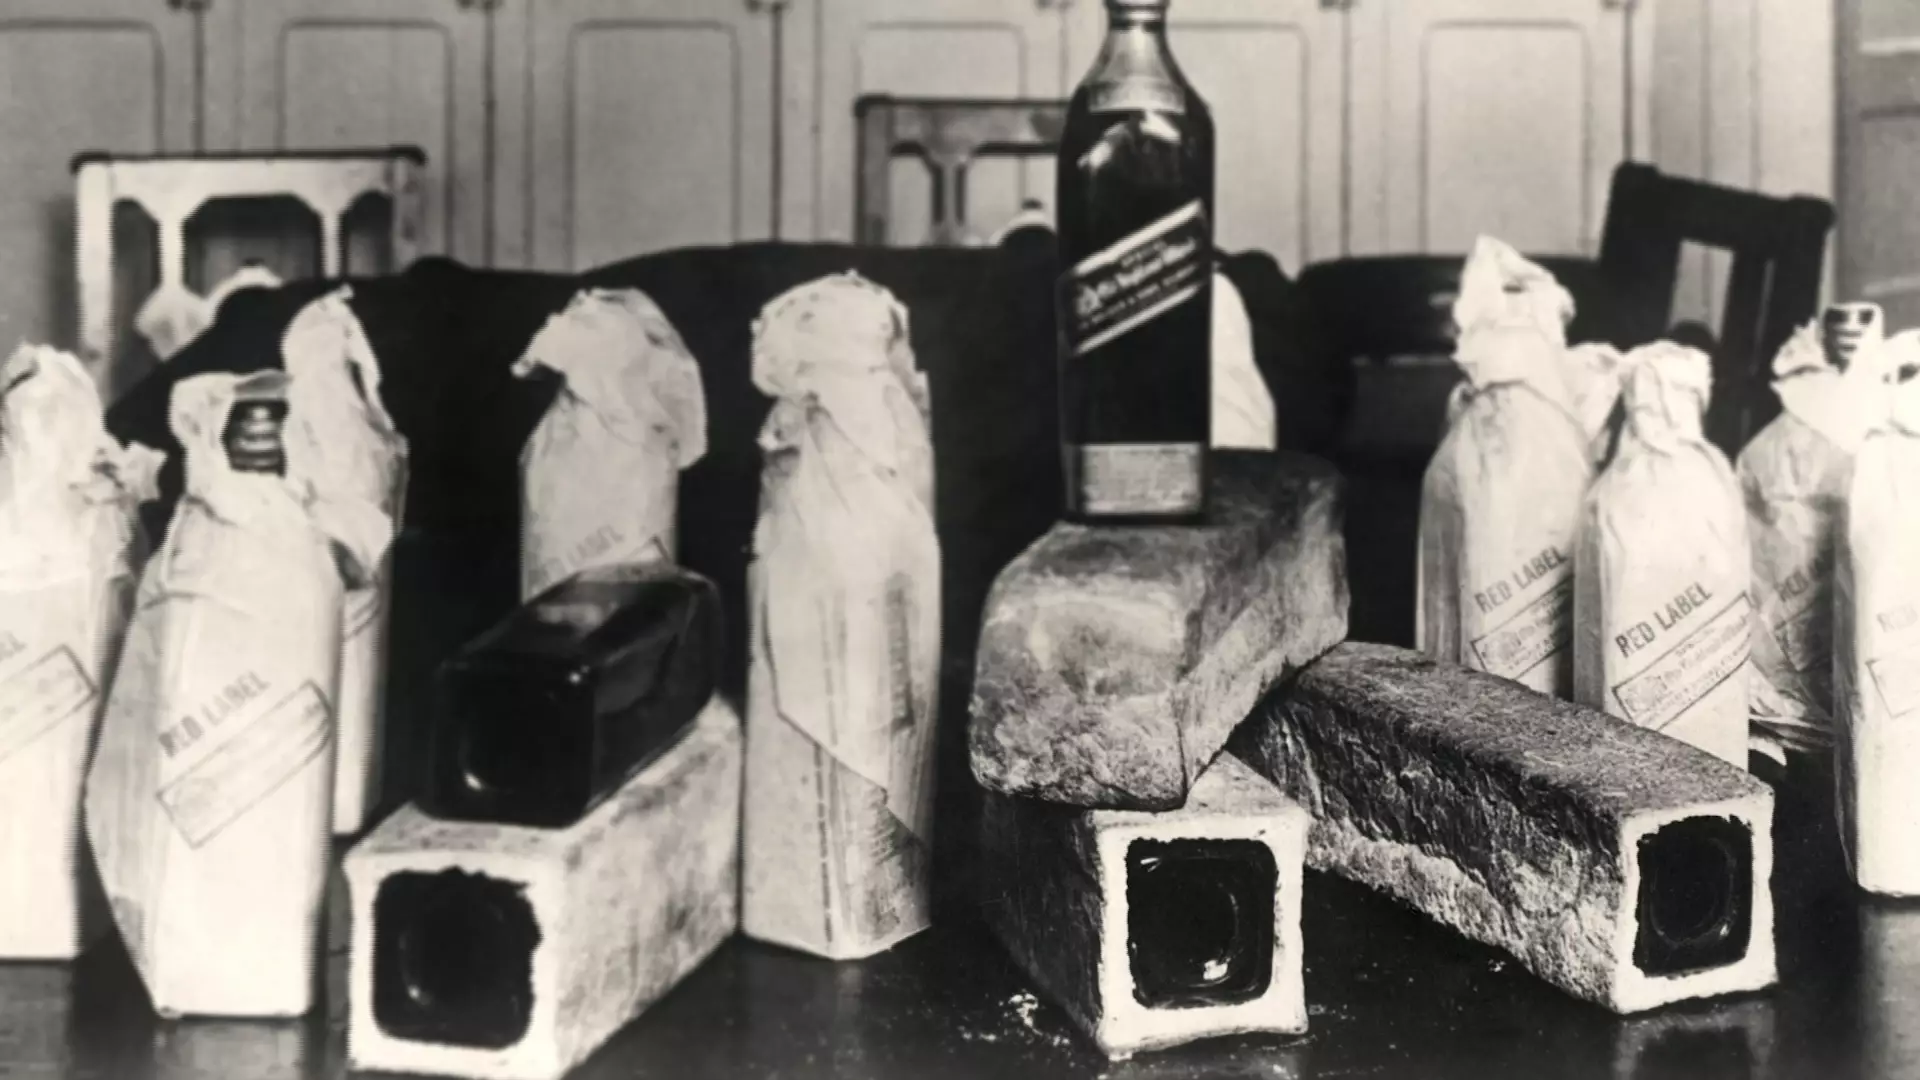 Bottles of whisky were hidden in loaves of bread